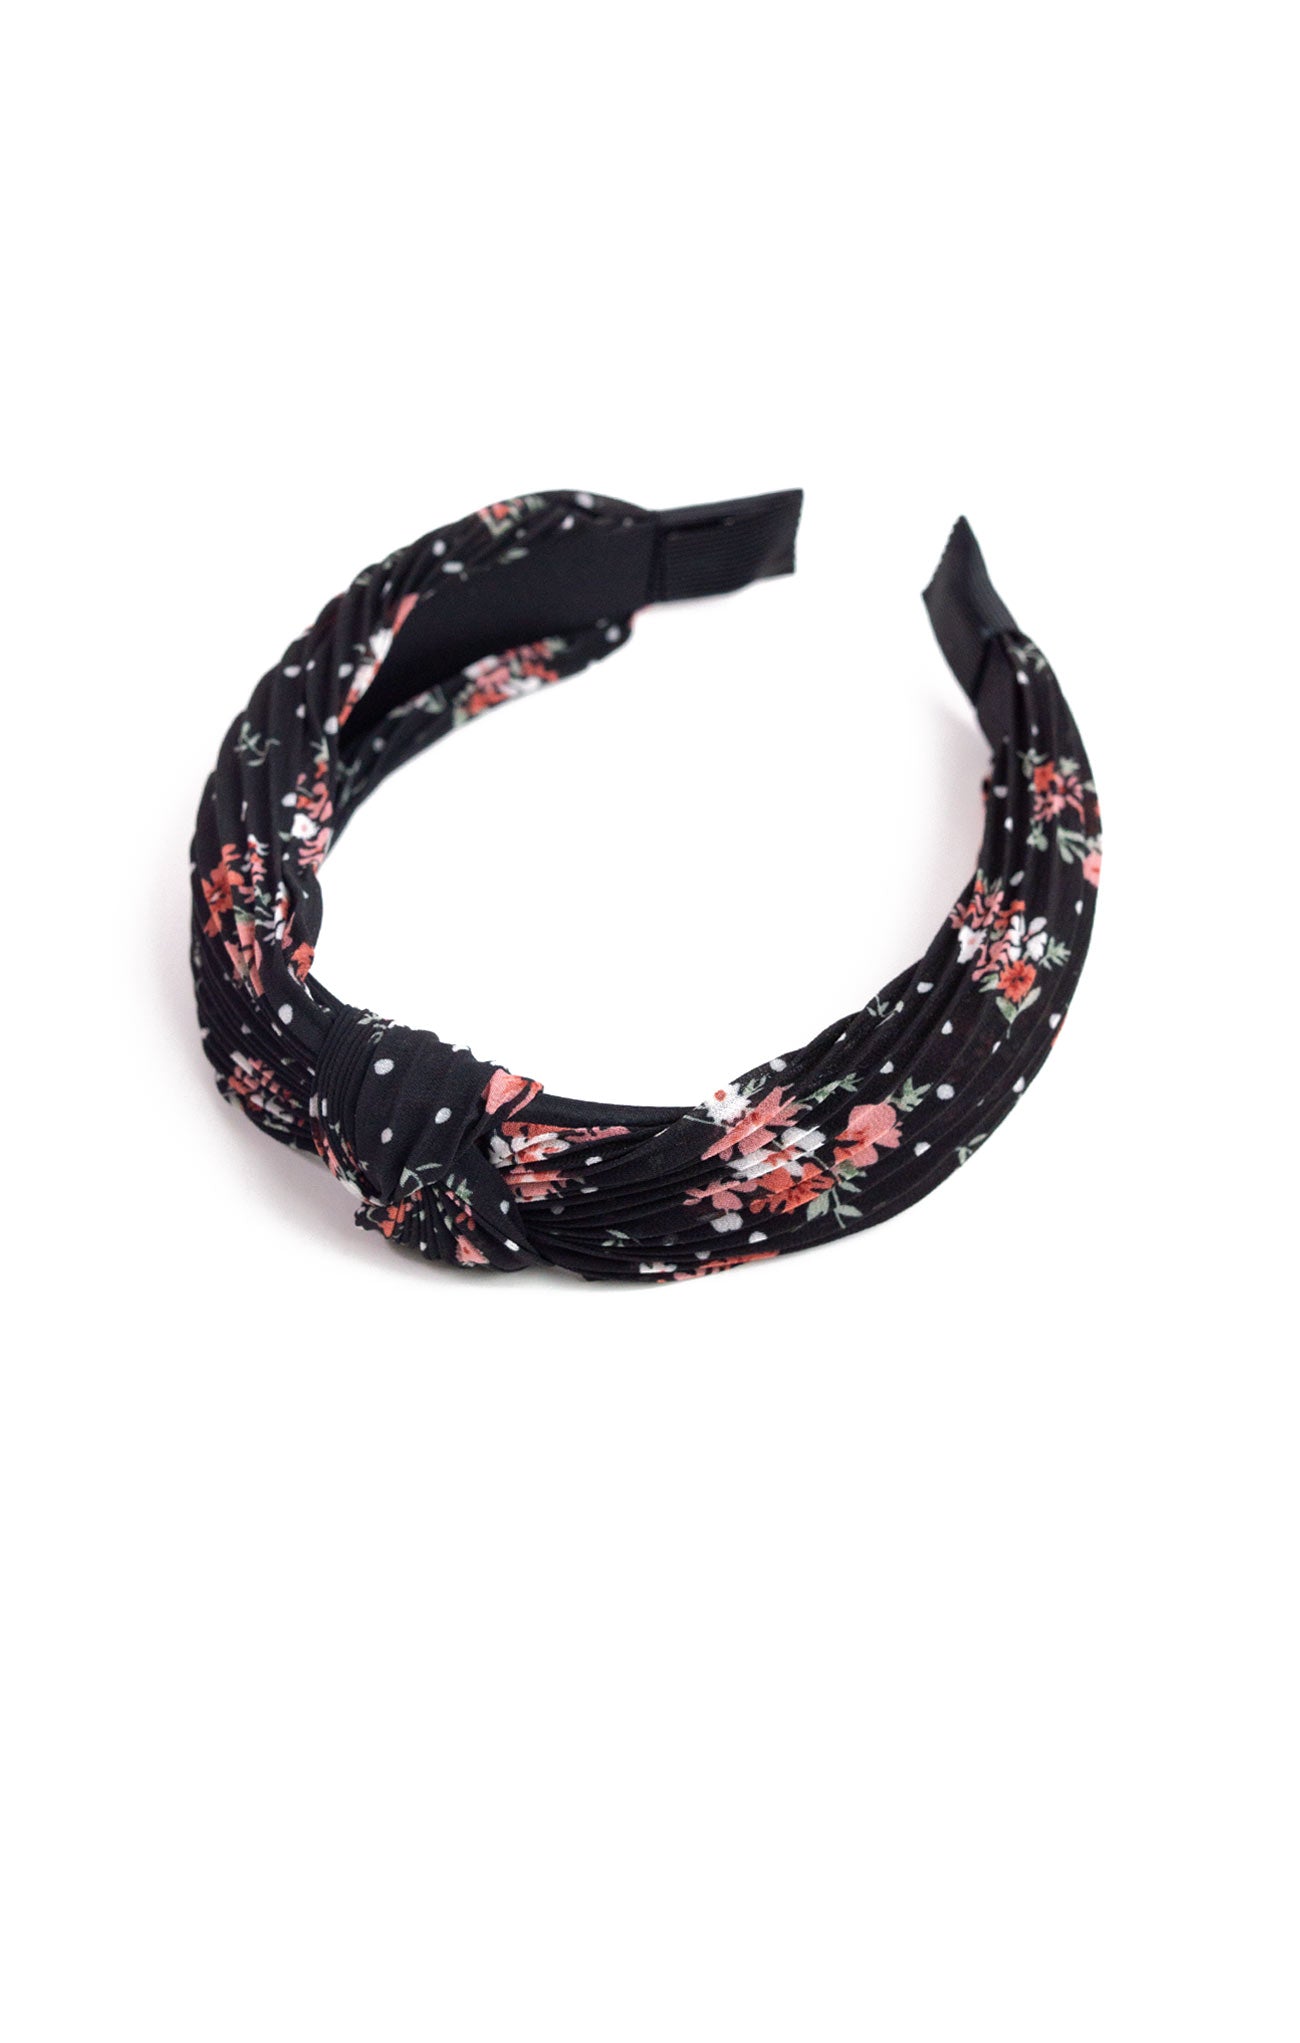 Floral Top Knot Headband Black - shopatgrace.com